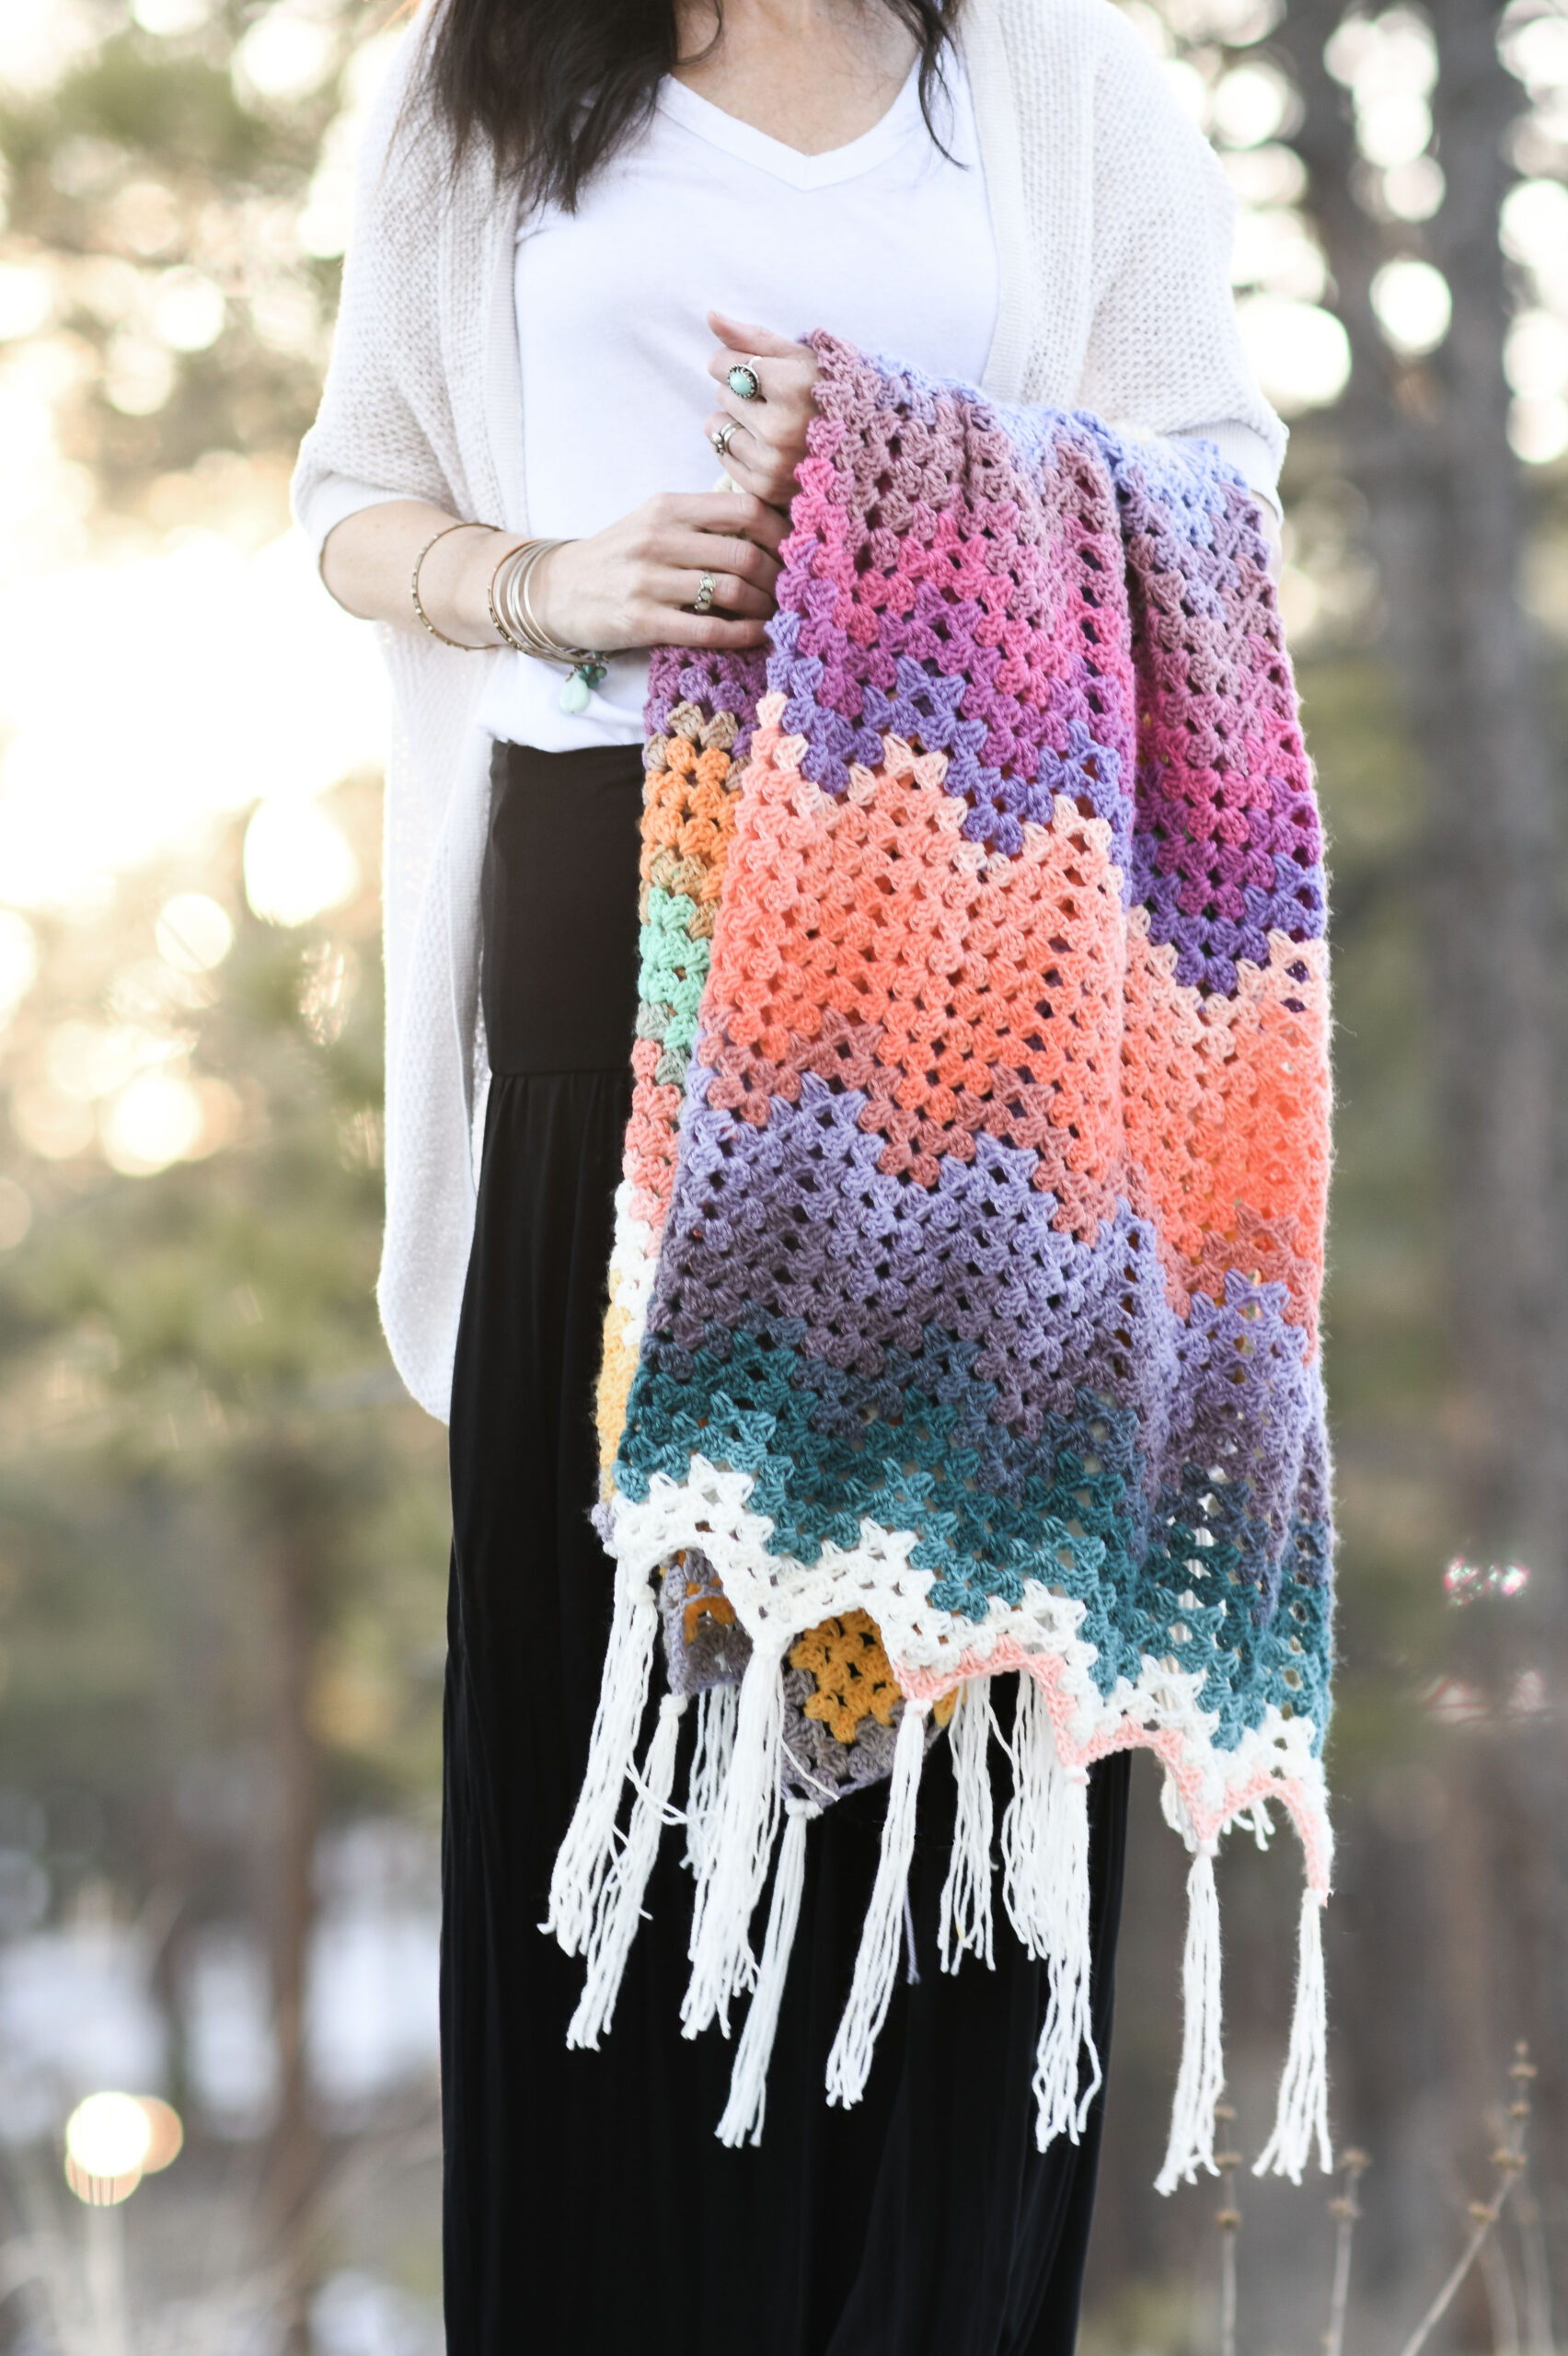 Rolling Hills Ripple Crochet Throw Blanket – Mama In A Stitch